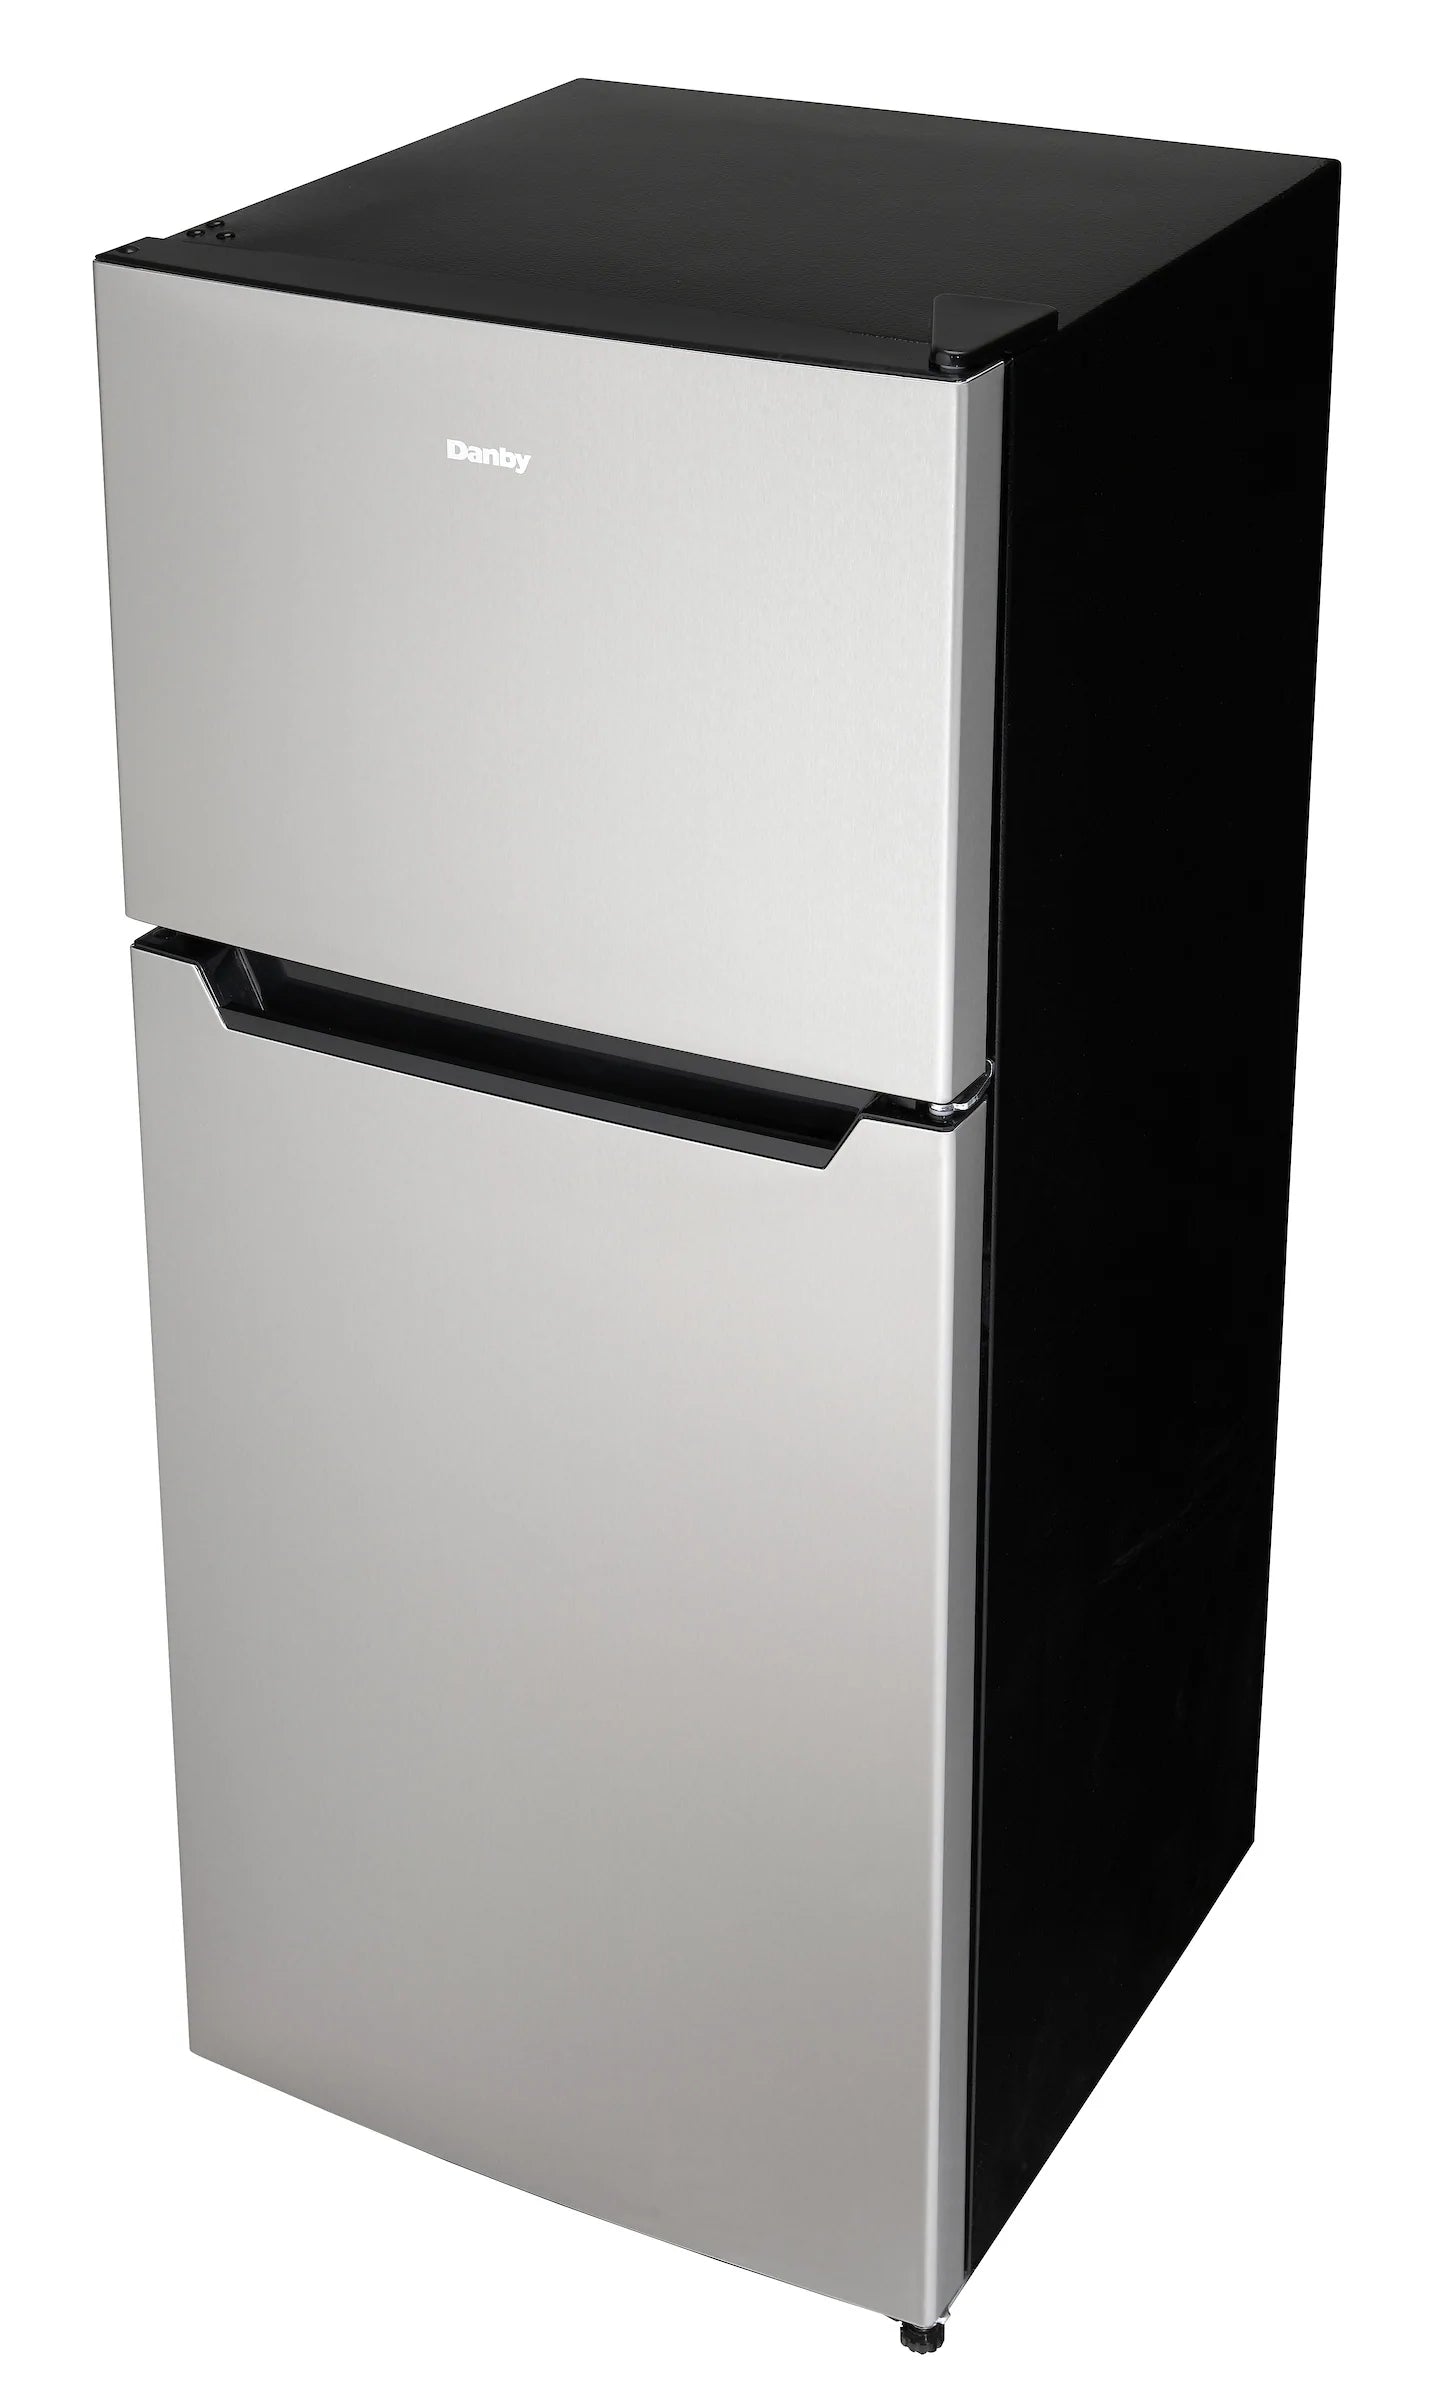 Danby 4.2 cu. ft. Top Mount Compact Refrigerator - Refurbished*